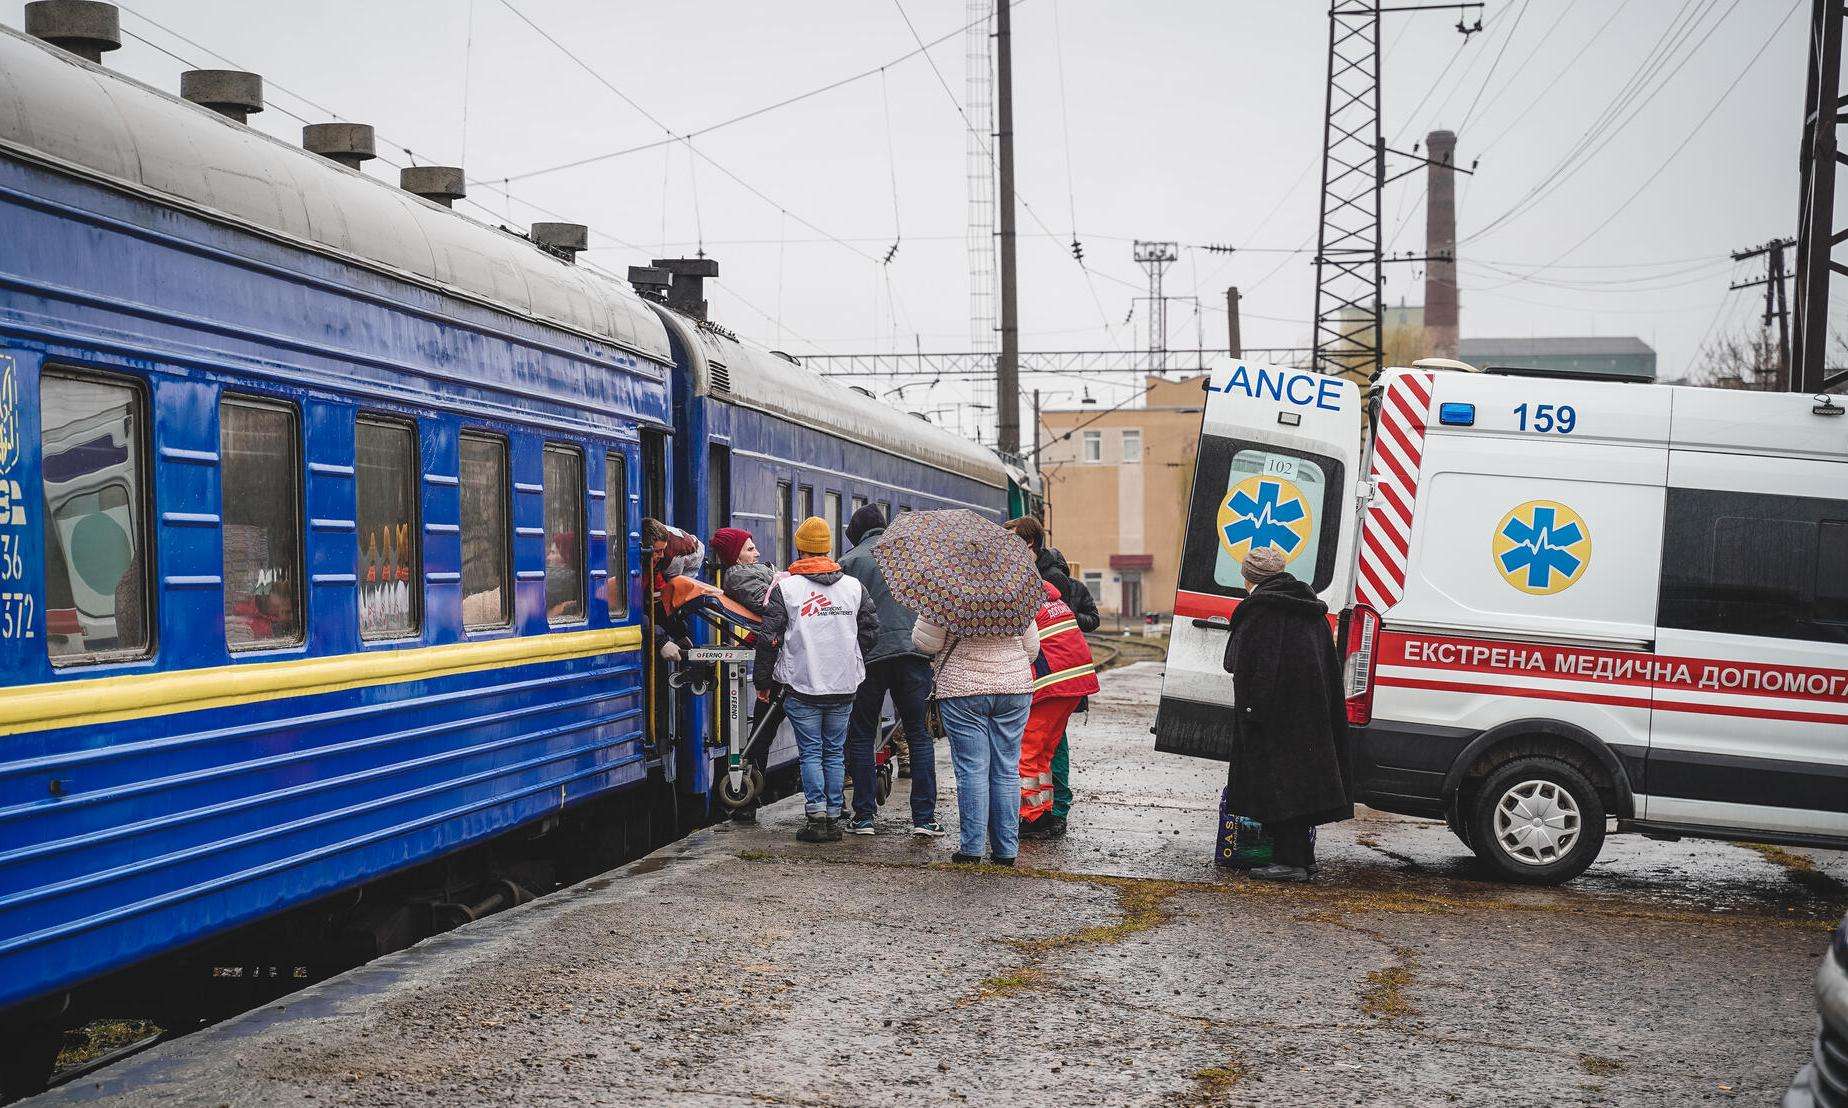 MSF's first medical referral train arrives in Lviv, Ukraine, on Friday, April 1 2022.